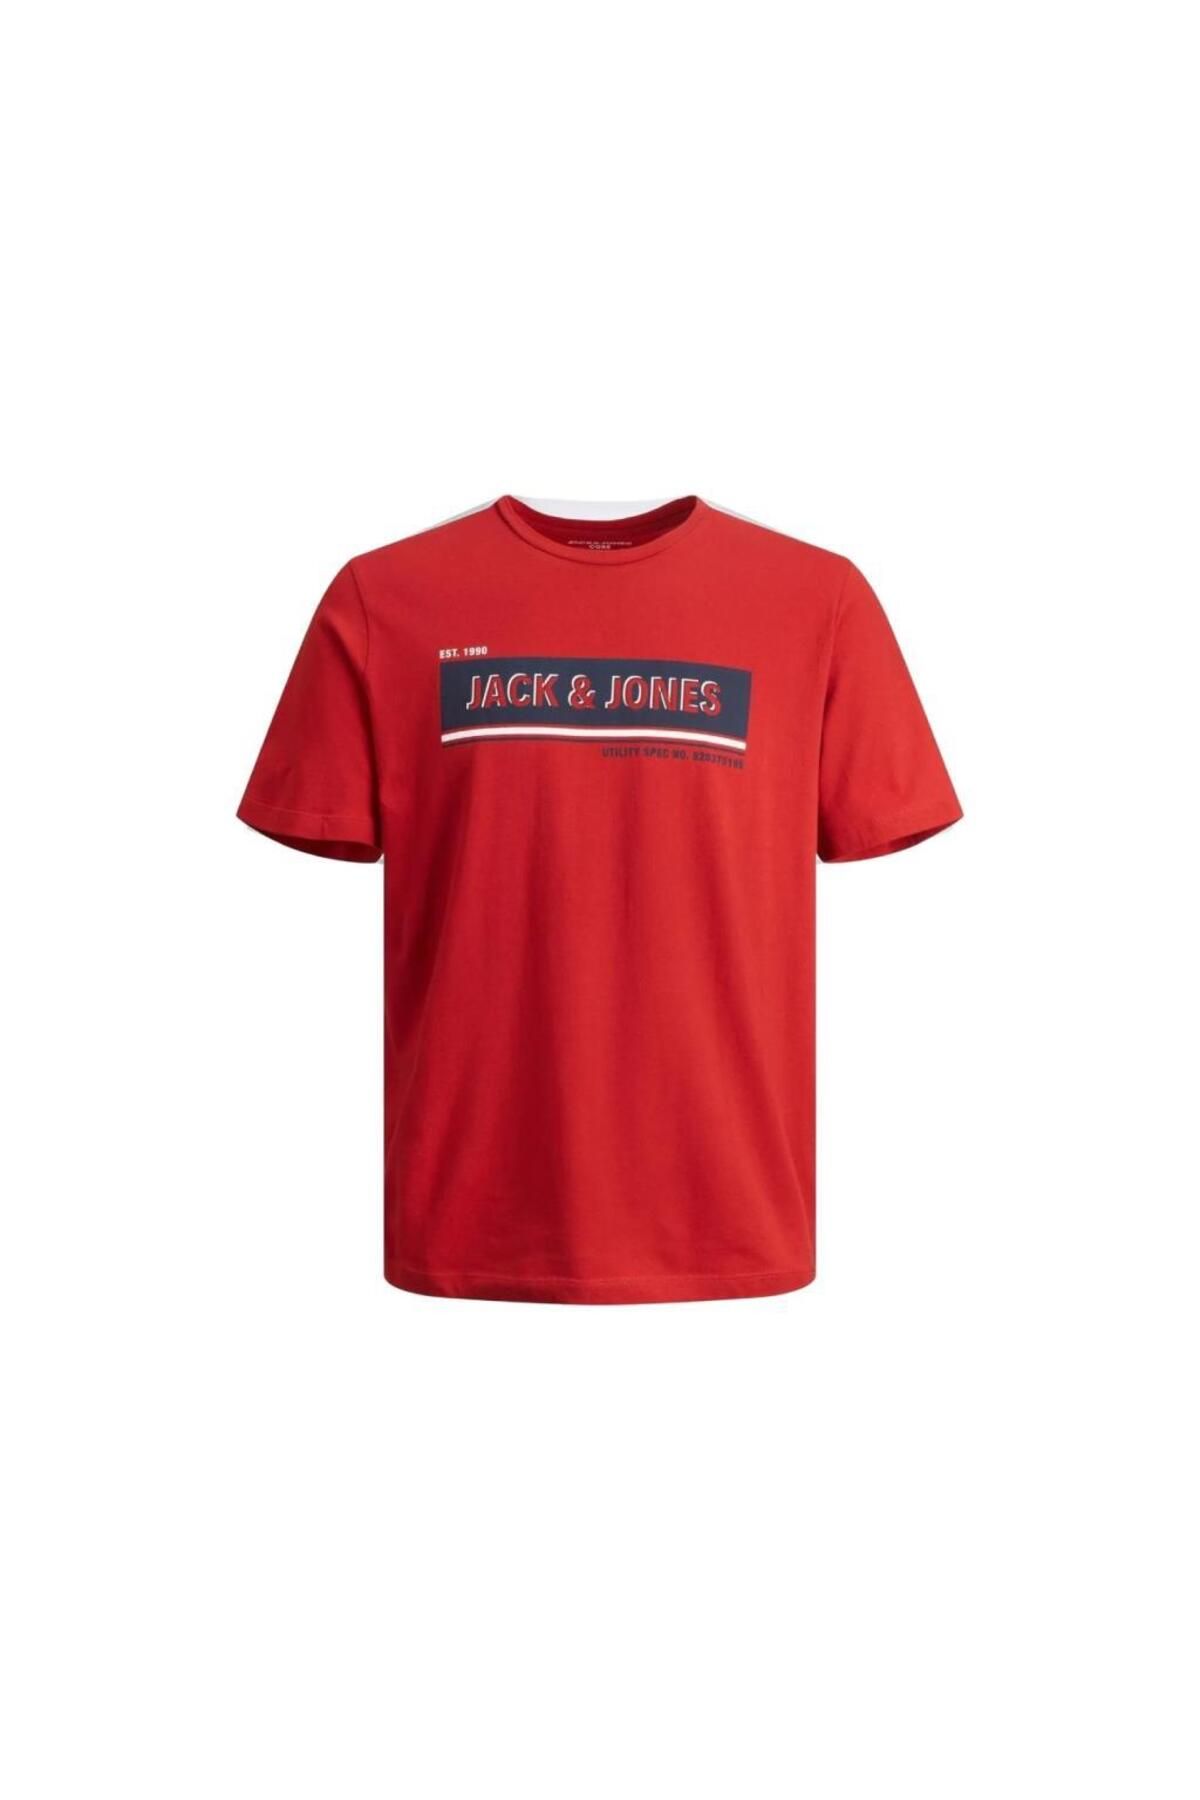 Jack & Jones 12232323 Tişört Kırmızı